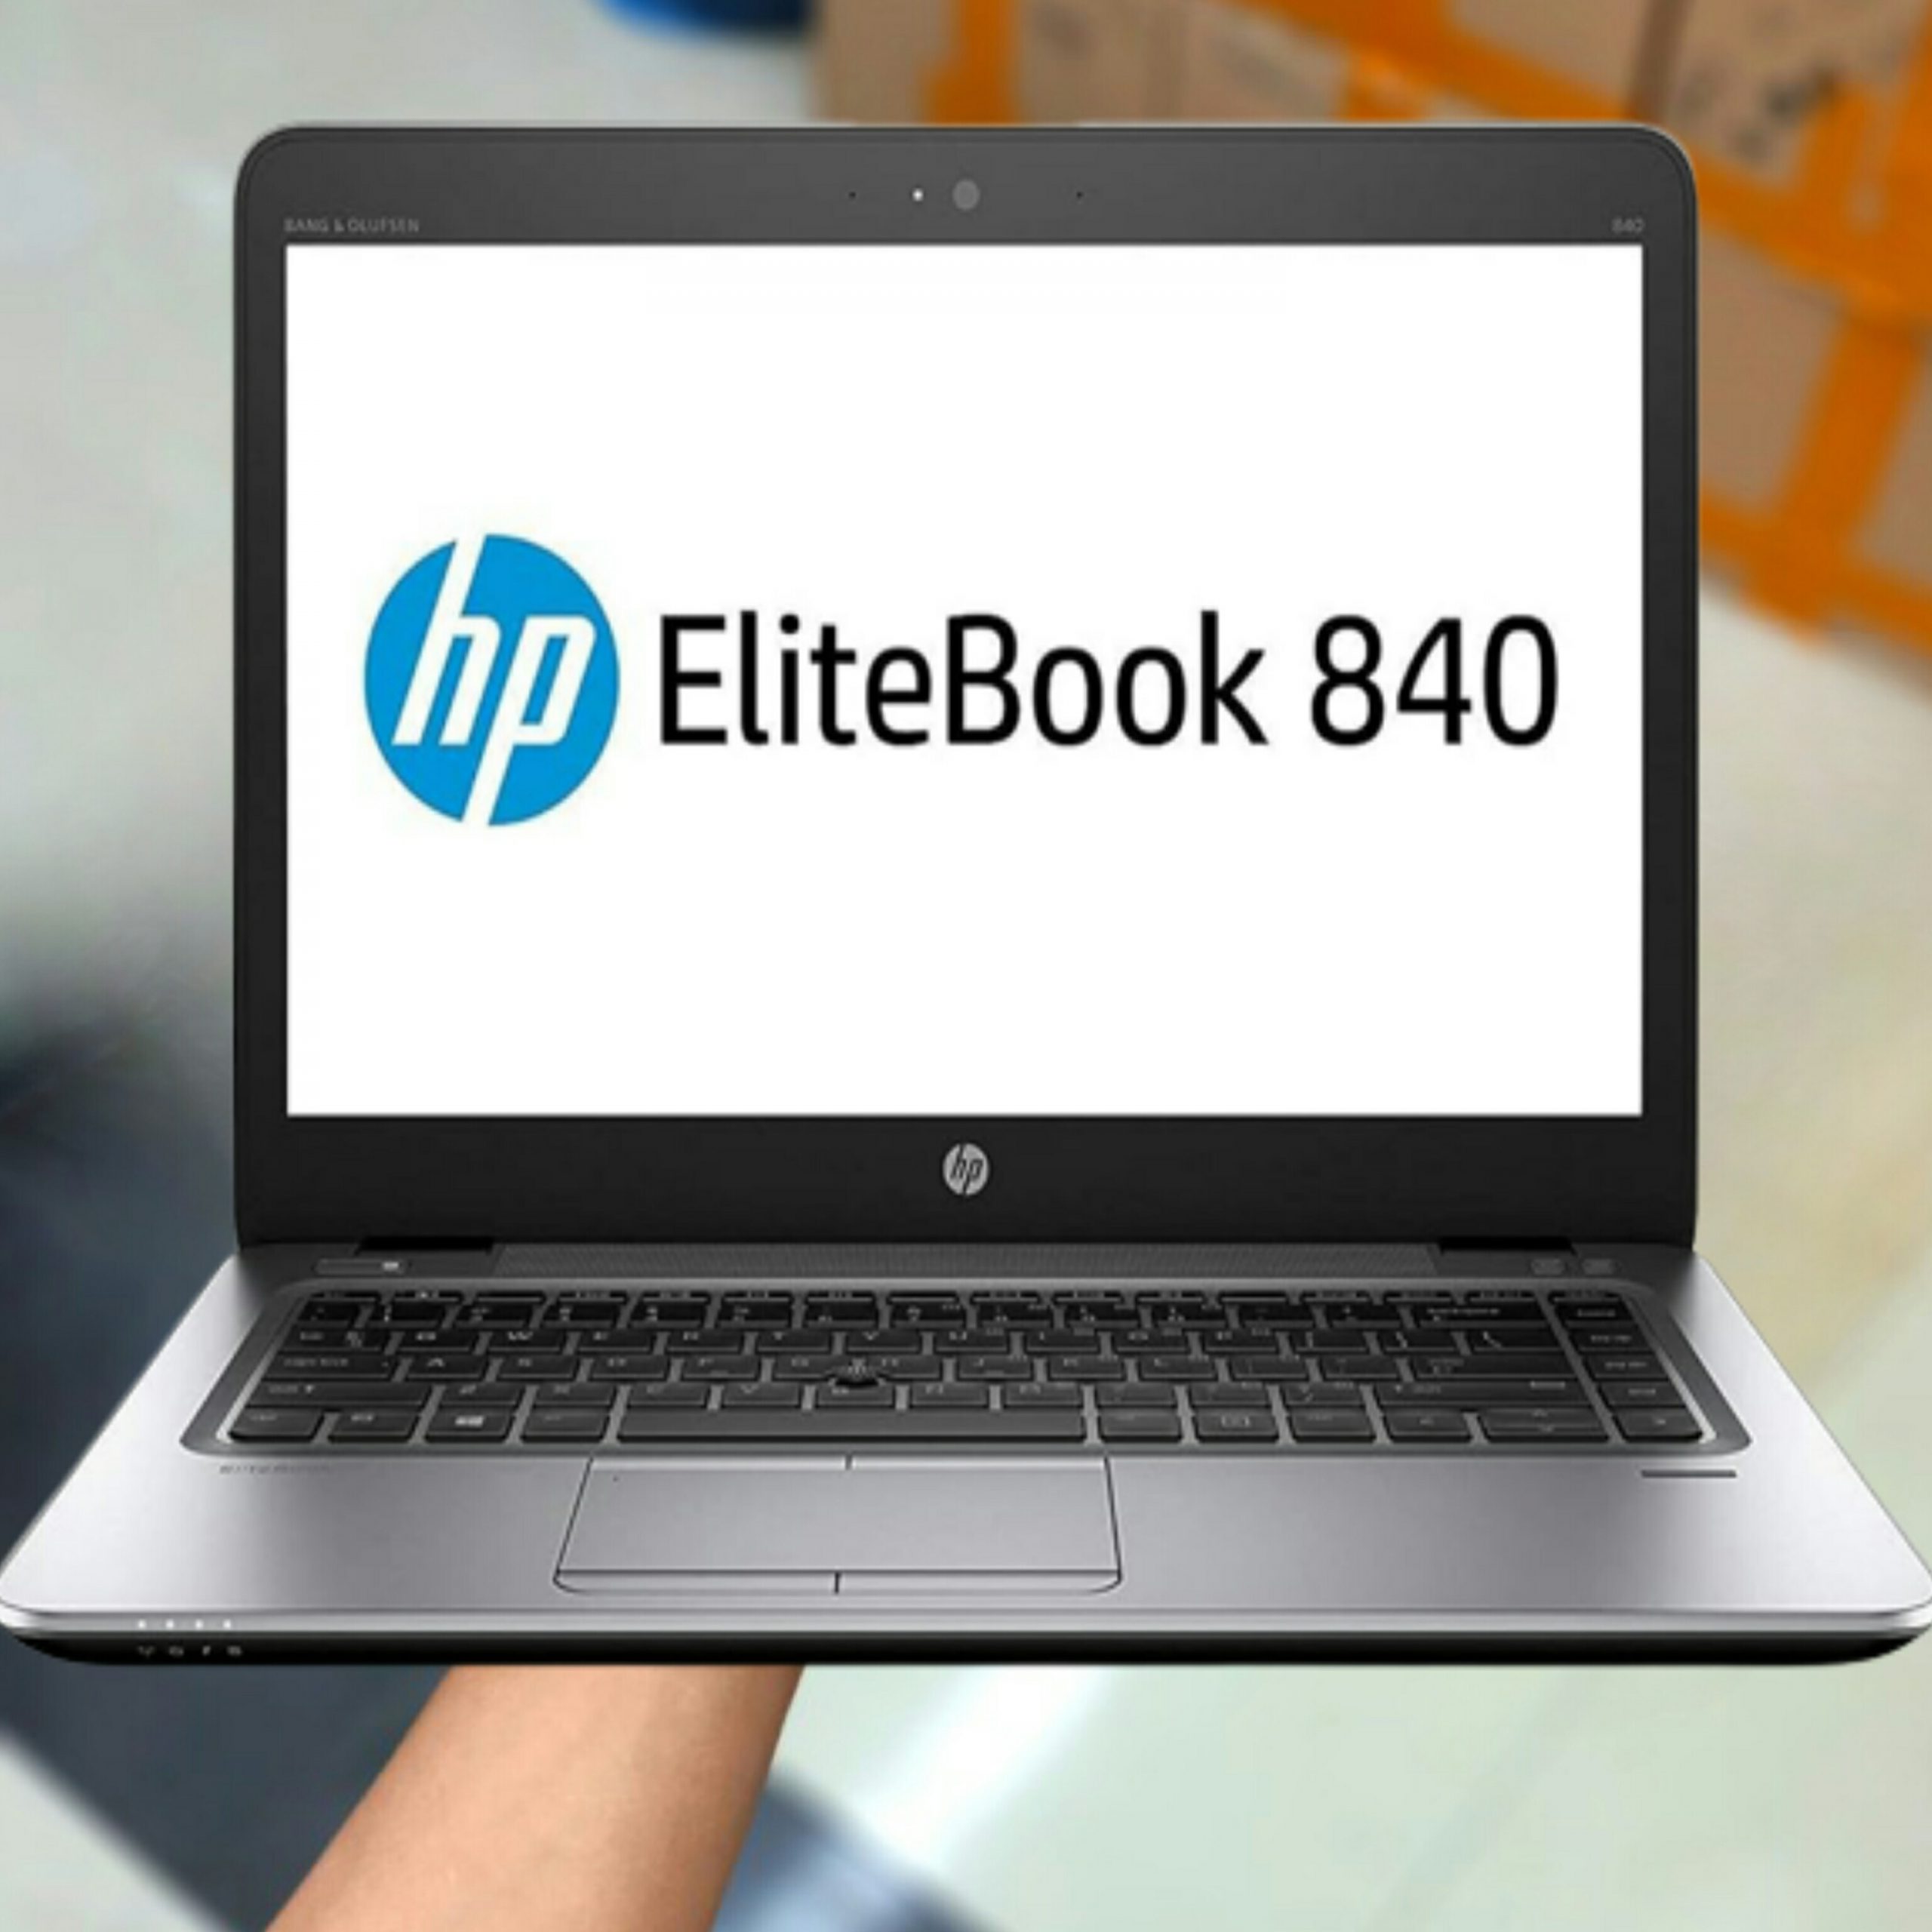 HP EliteBook 840 G4 7th Gen Laptop Price in Pakistan